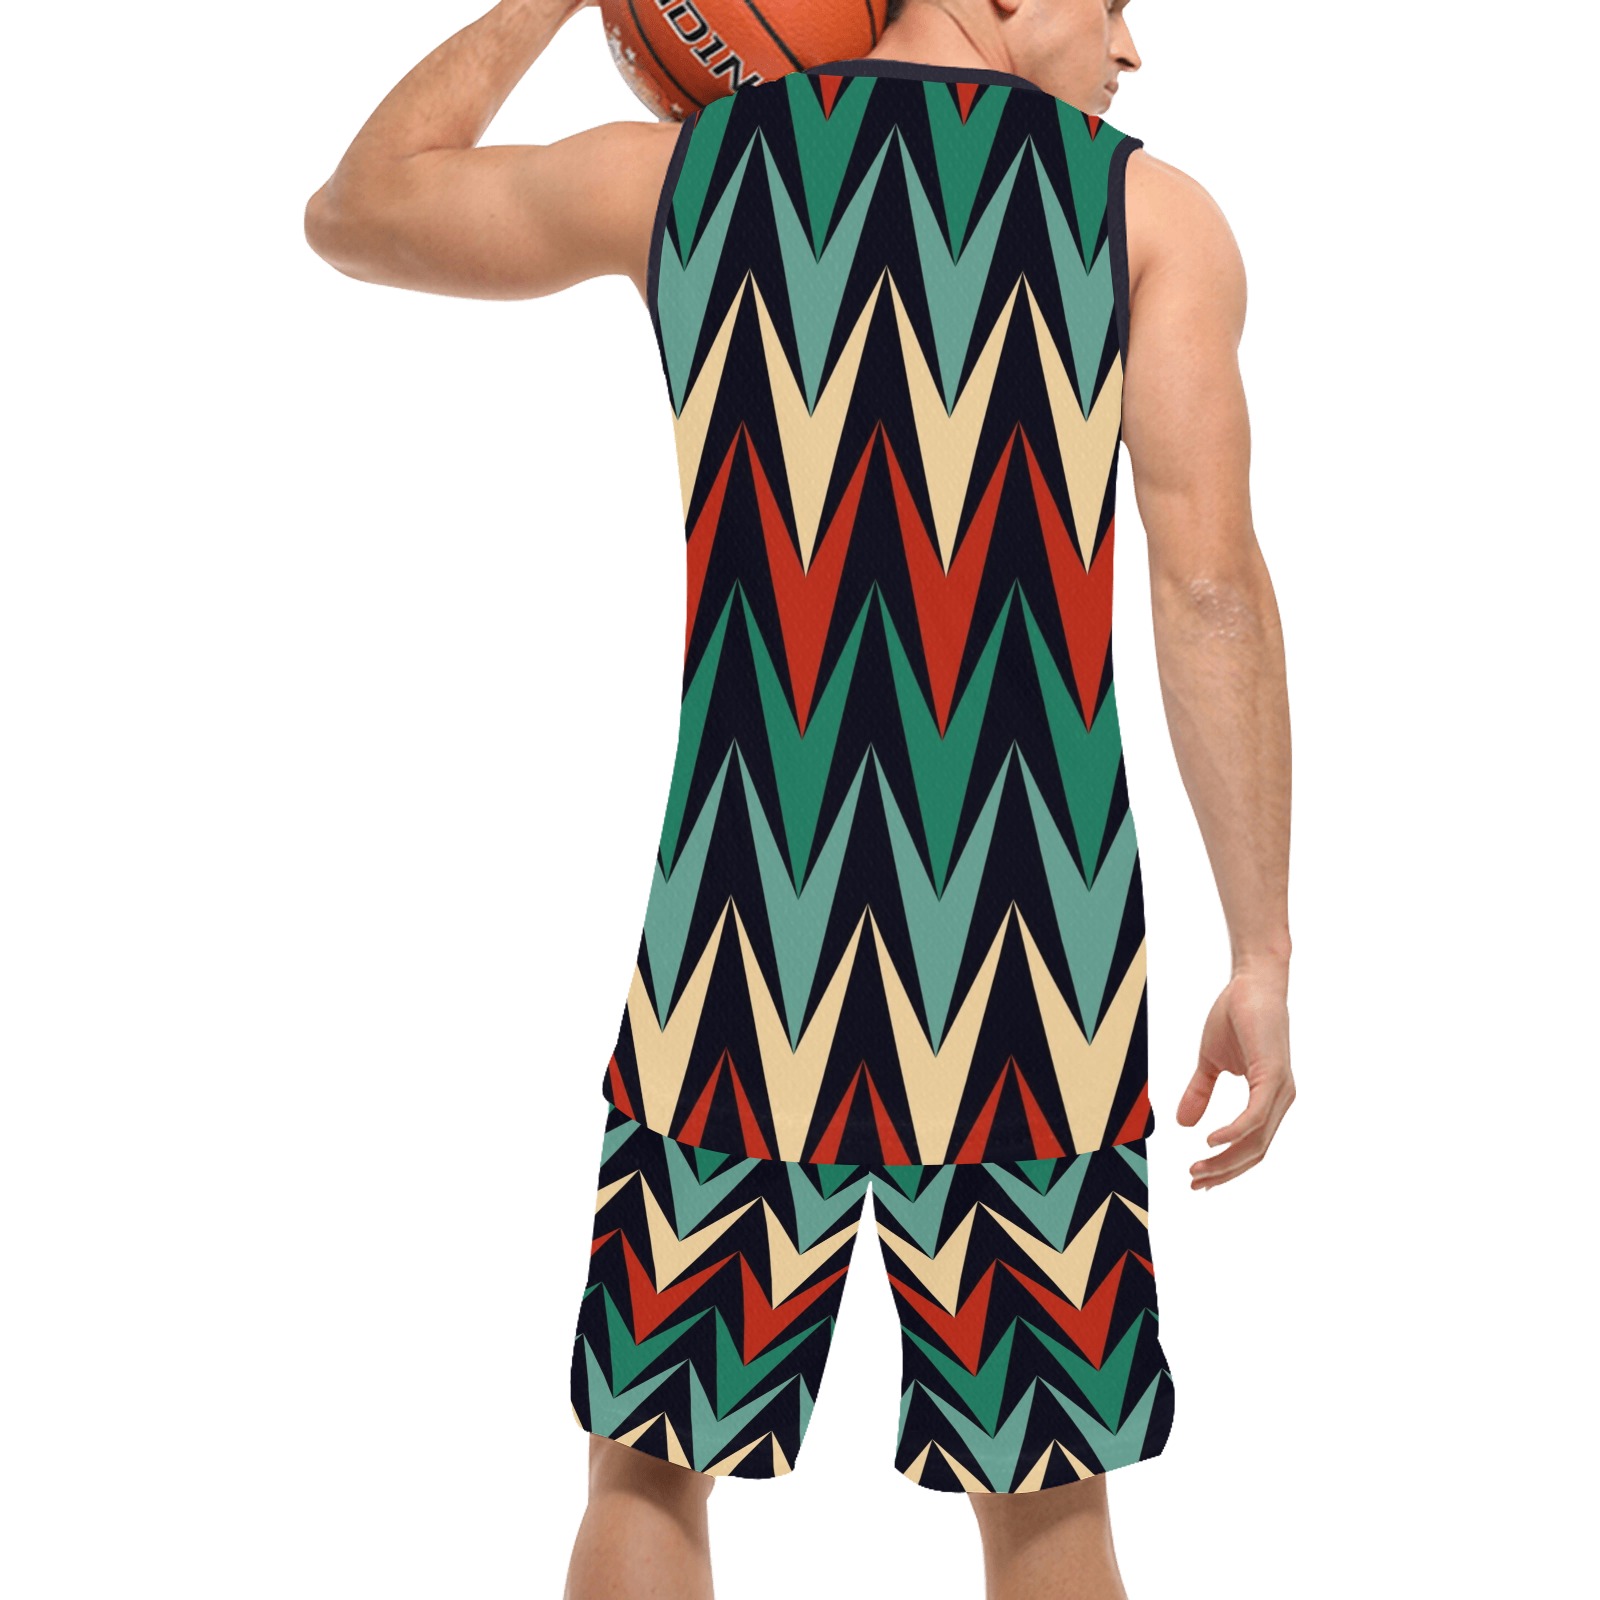 Chevron Basketball Uniform Basketball Uniform with Pocket